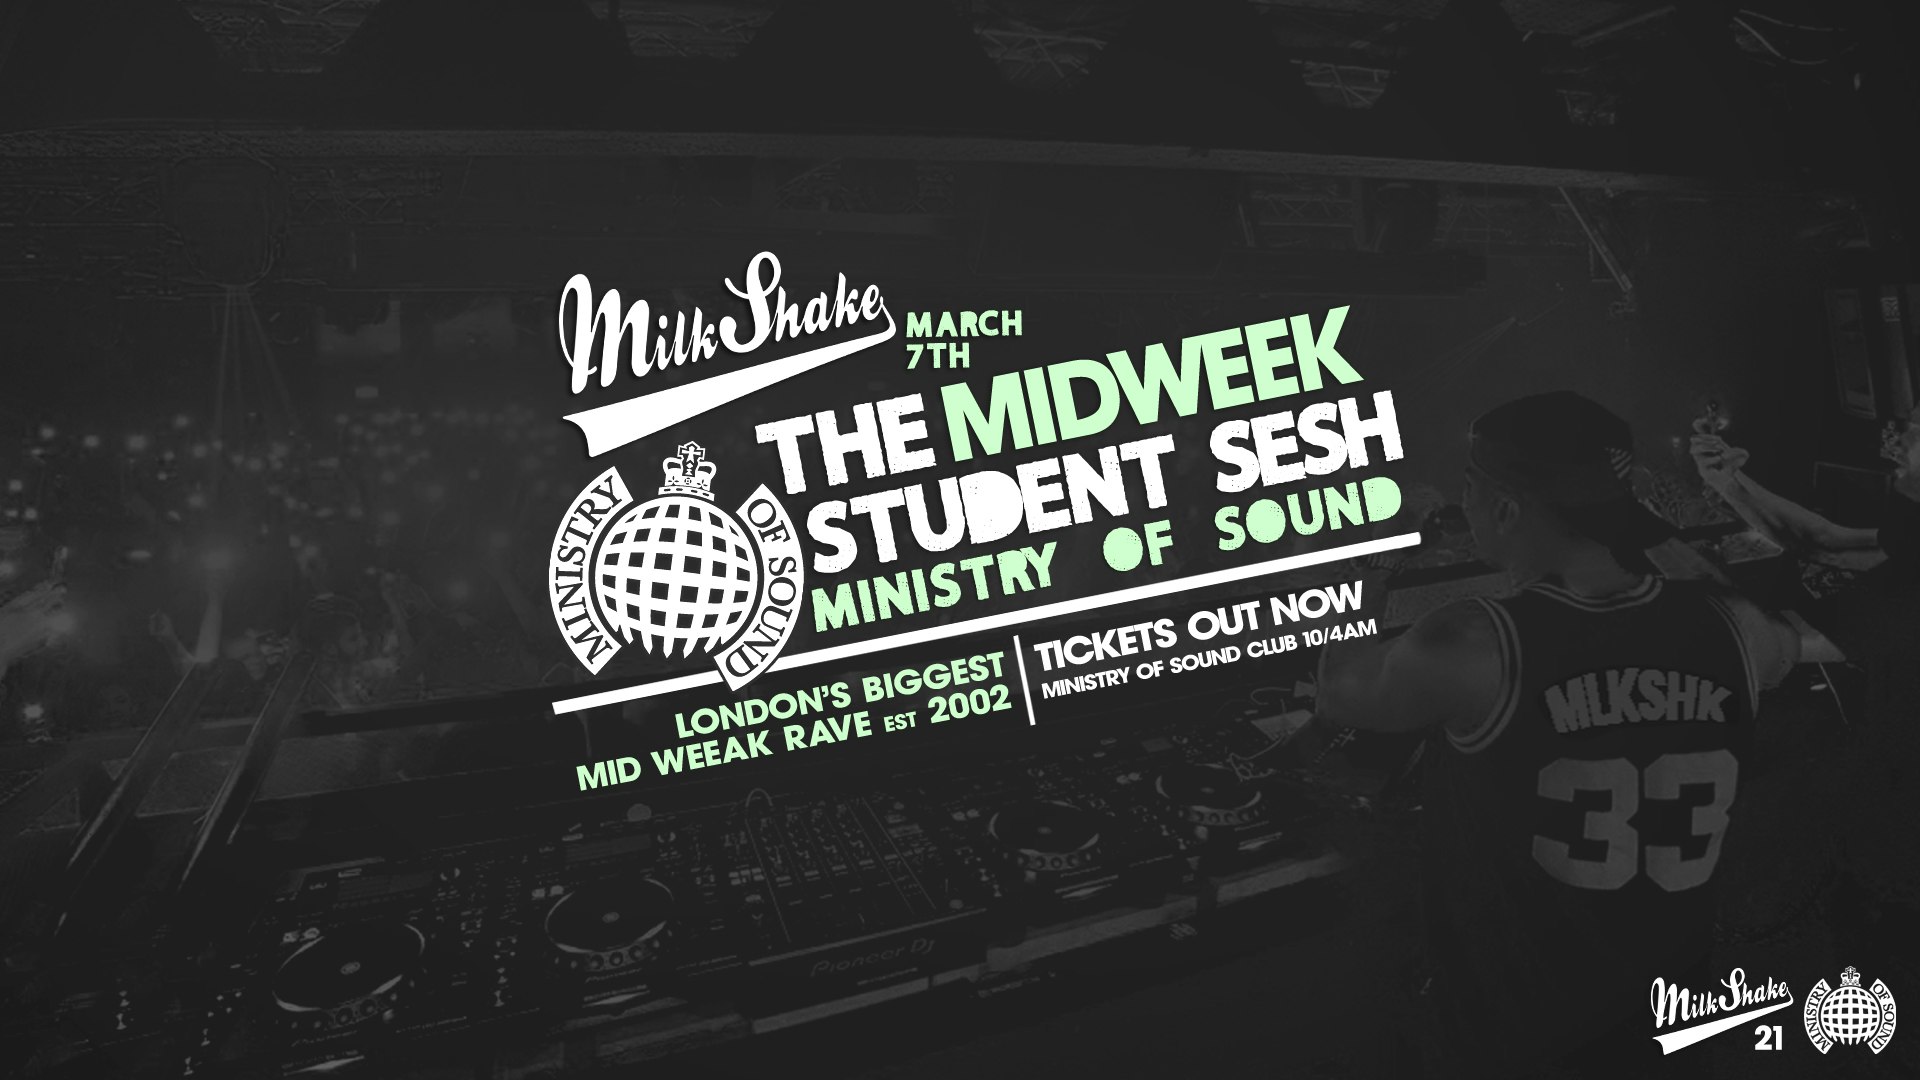 Milkshake, Ministry of Sound | London’s Biggest Student Night 🔥 March 7th 🌍